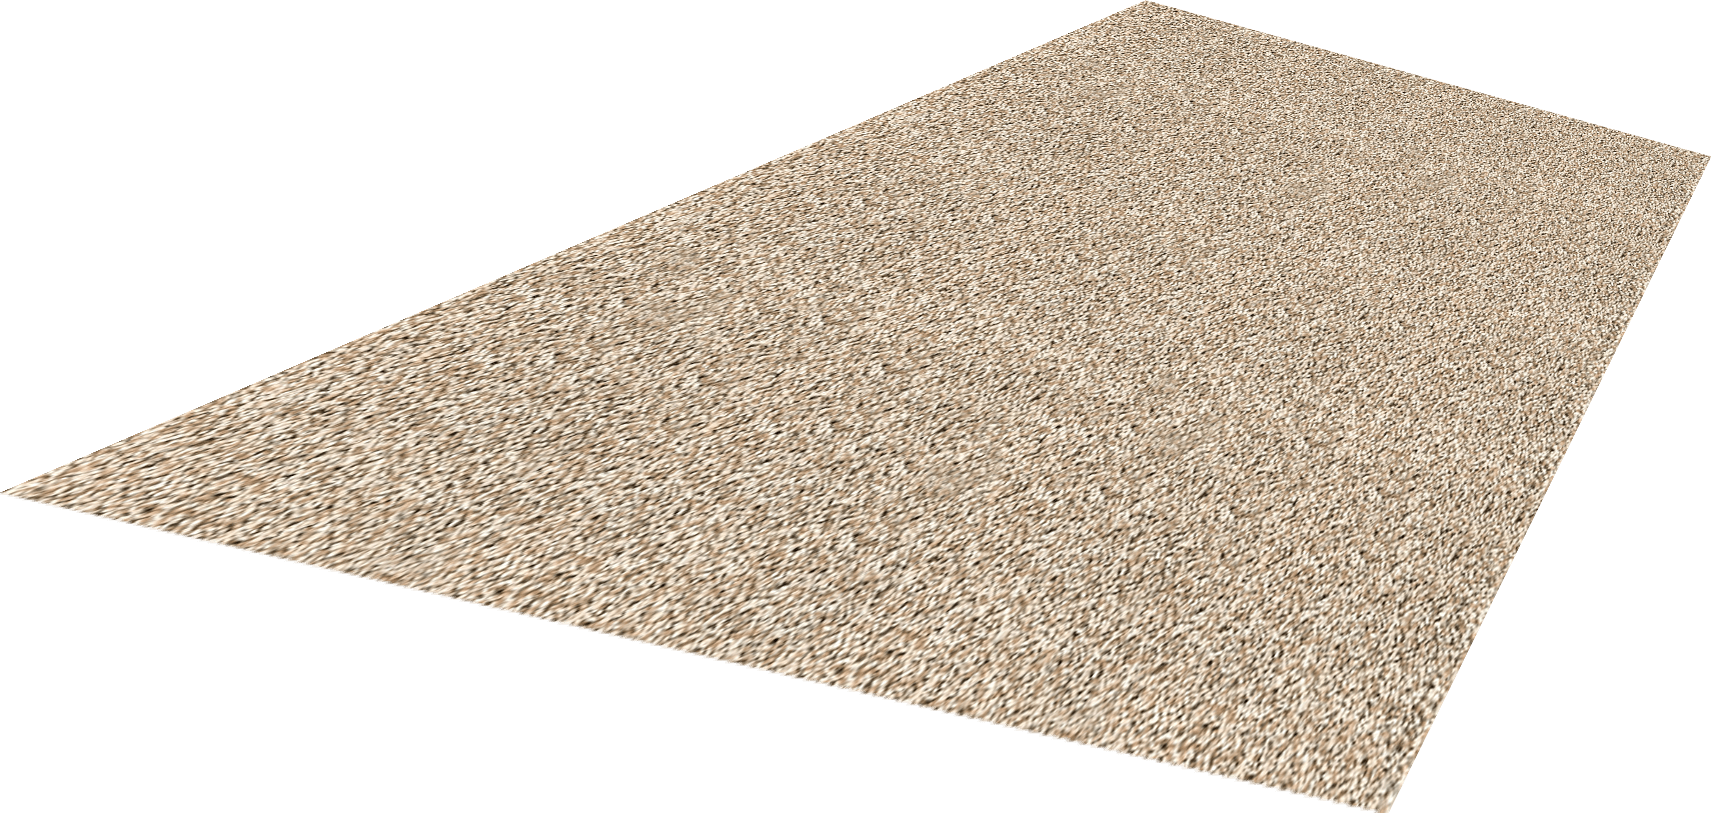 Floor with a beige carpet design